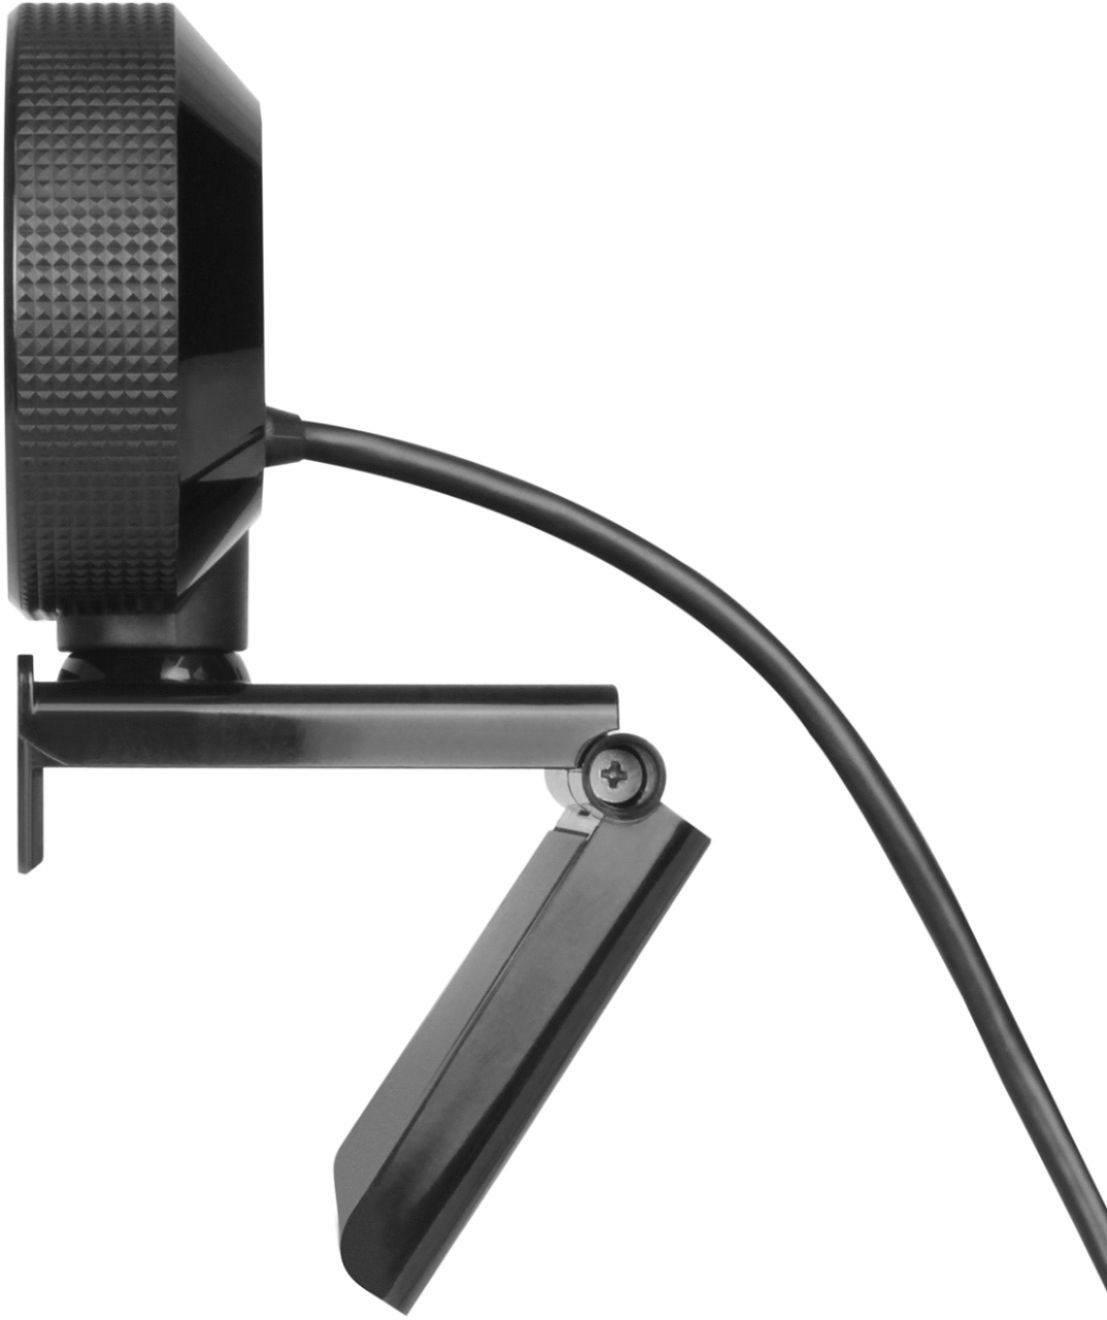 Left View: Razer - Kiyo 1920 x 1080 Webcam with Adjustable Ring Light - Black